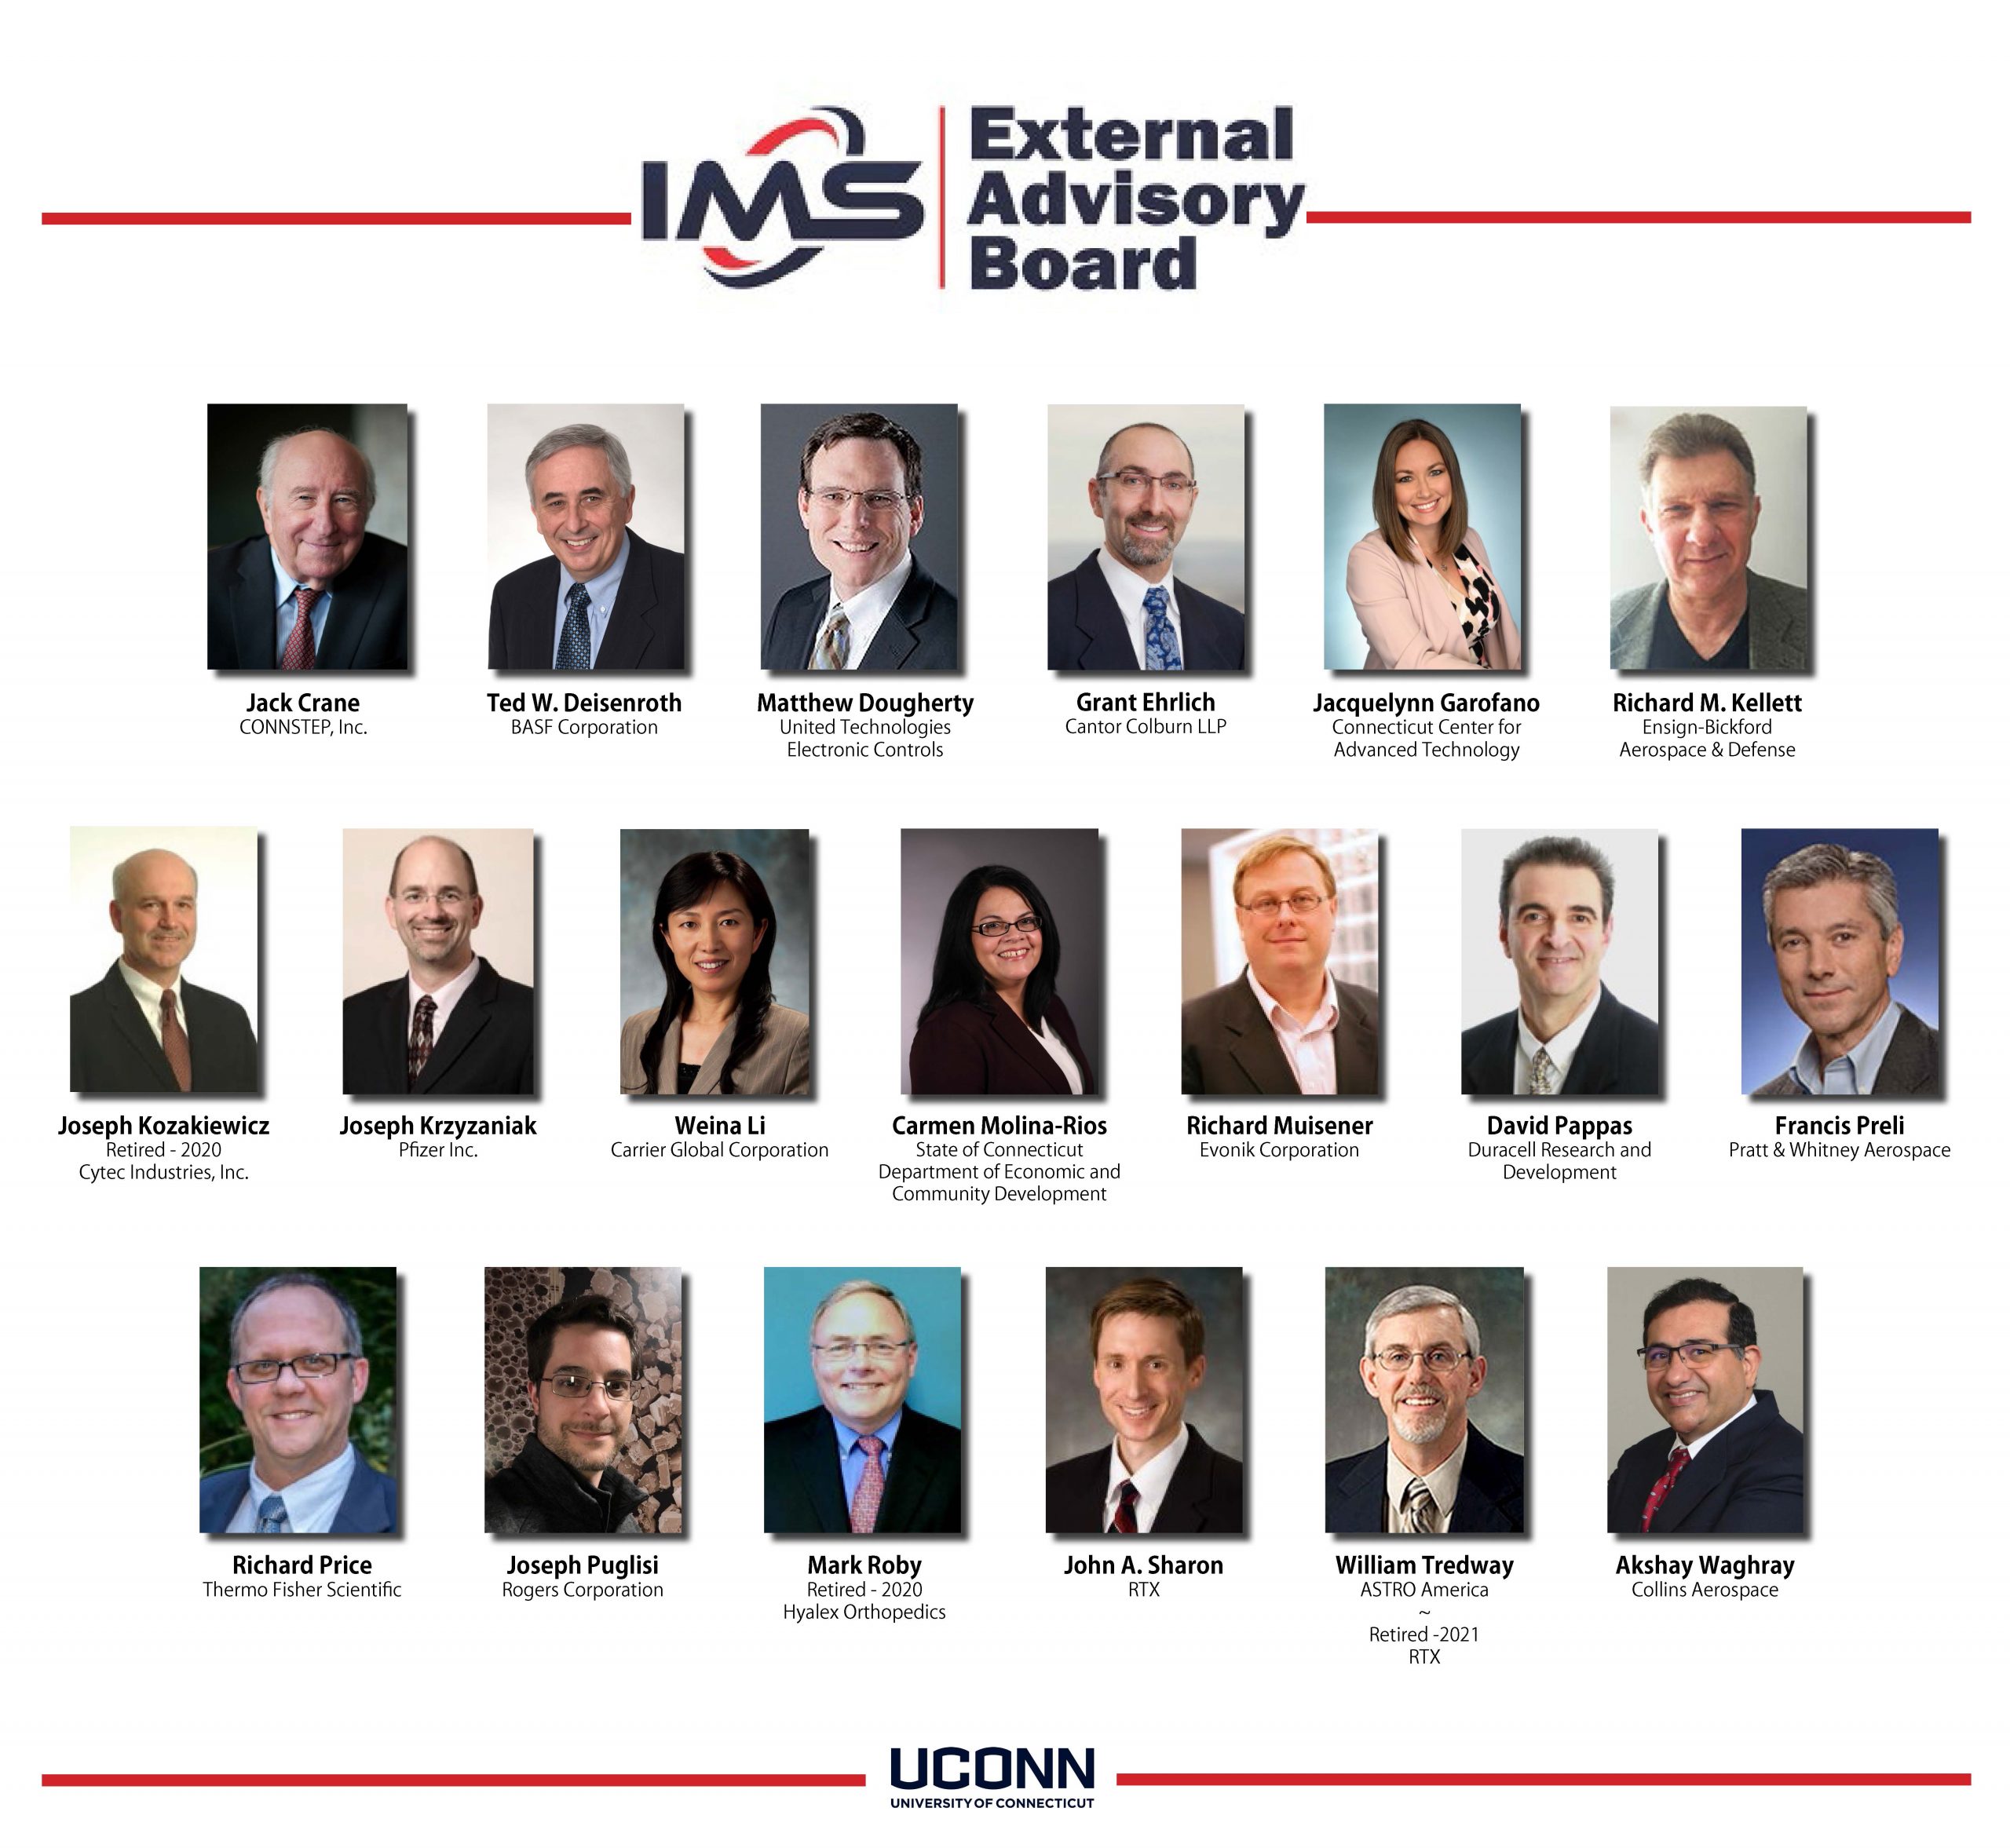 IMS External Advisory Board